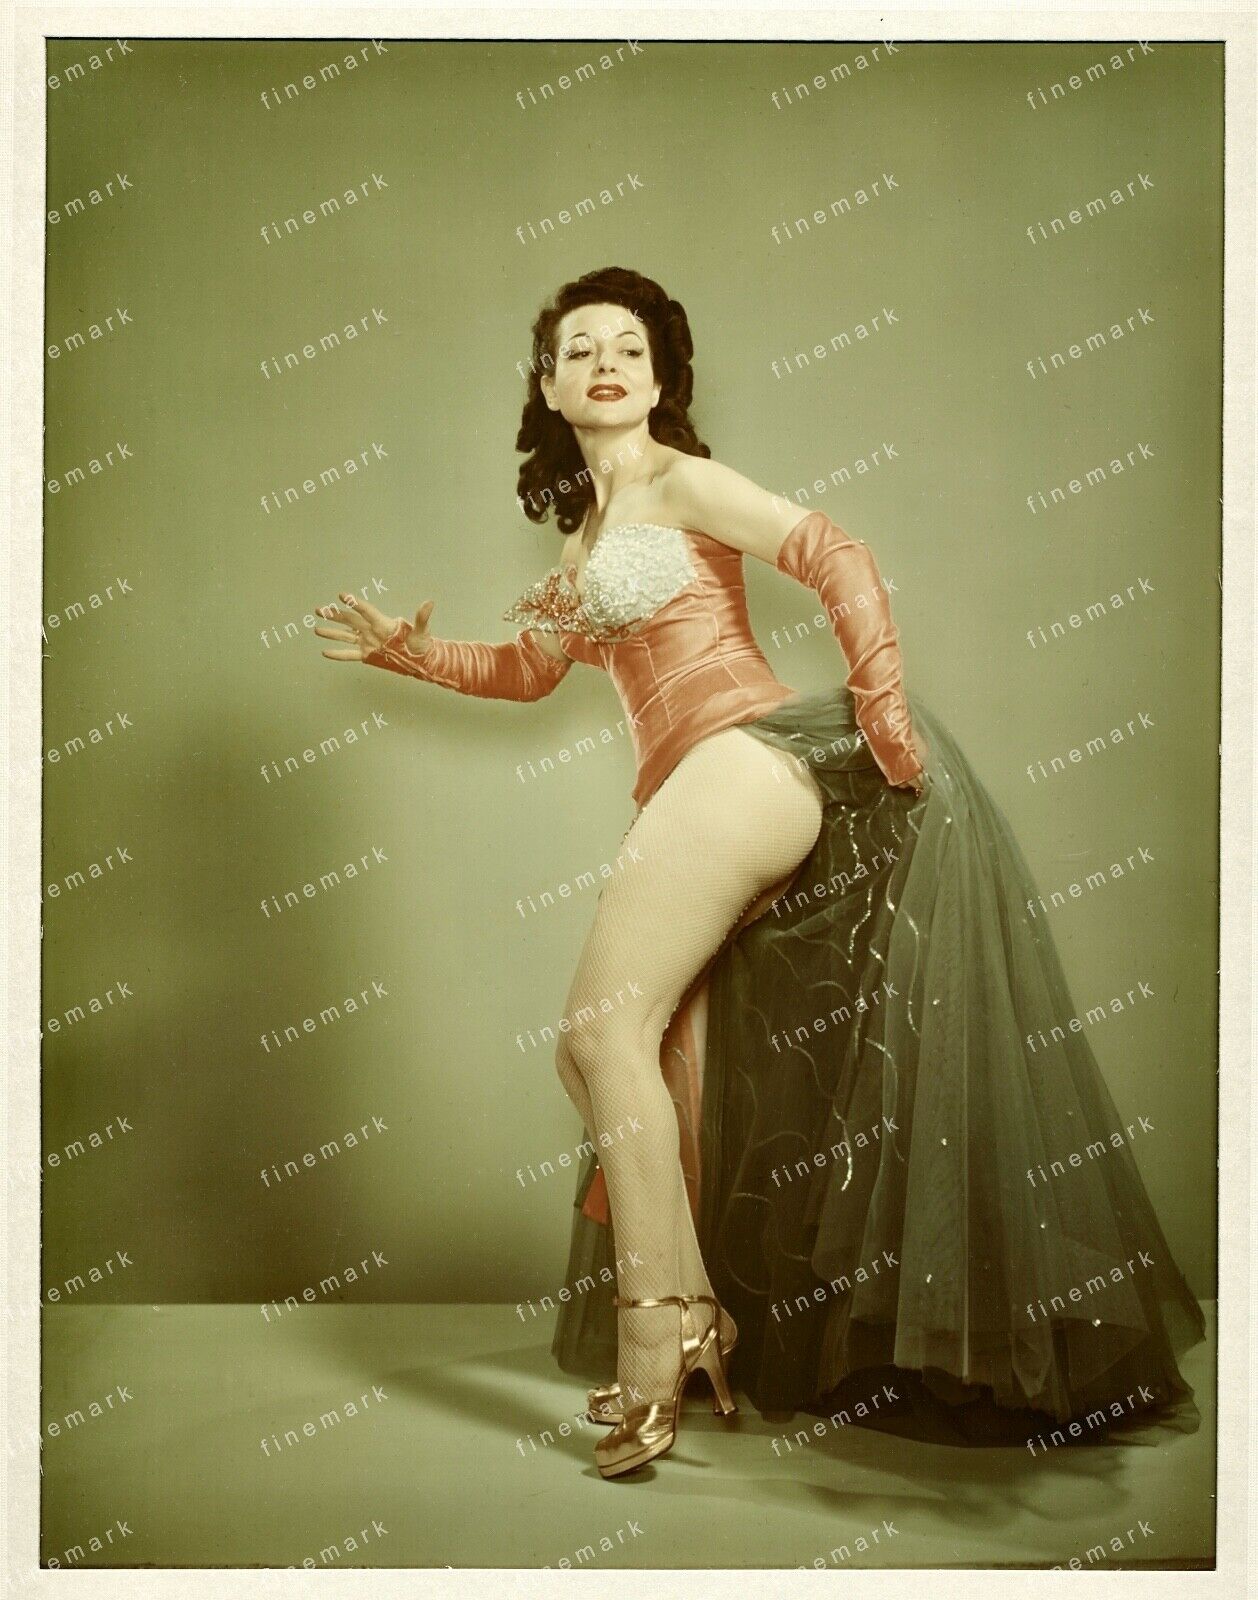 1950 PHOTOGRAPH VINTAGE ORIGINAL ROSE LA ROSE BURLESQUE ANSCO HIGH GLOSS COLOR 3